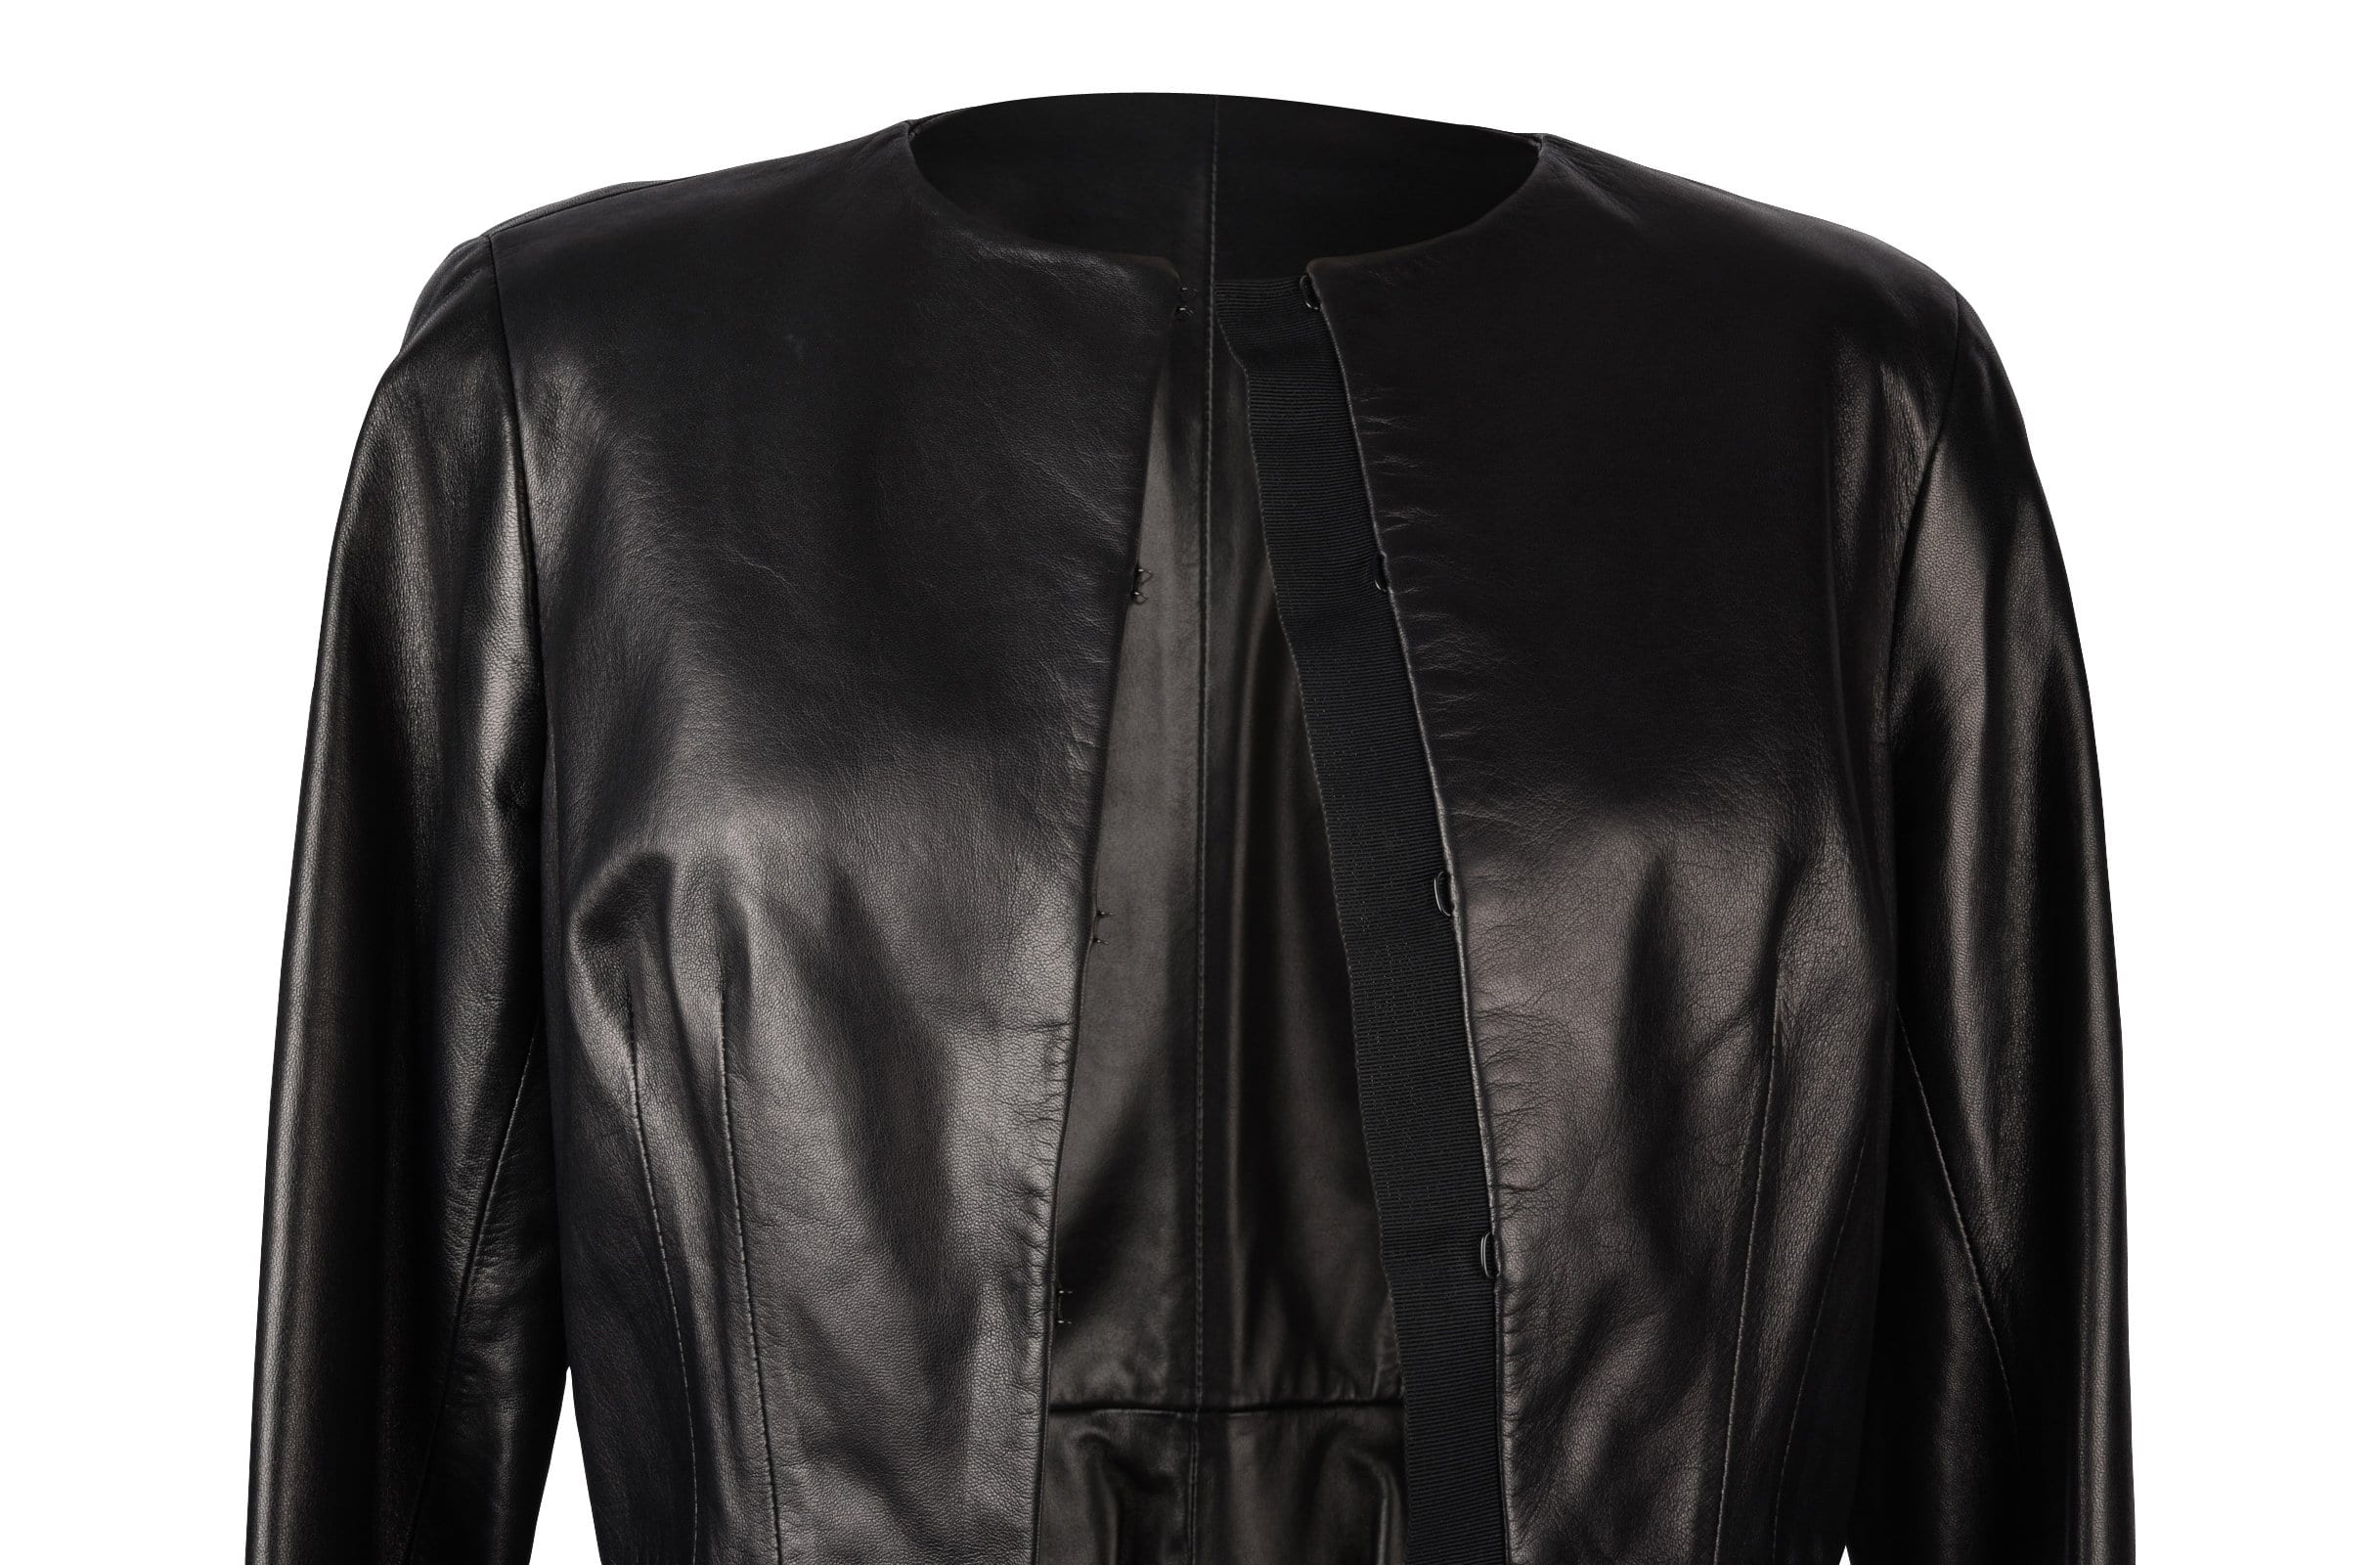 Carolina Herrera Jacket Peplum Black Lambskin Leather Feather Light 8 mint - mightychic